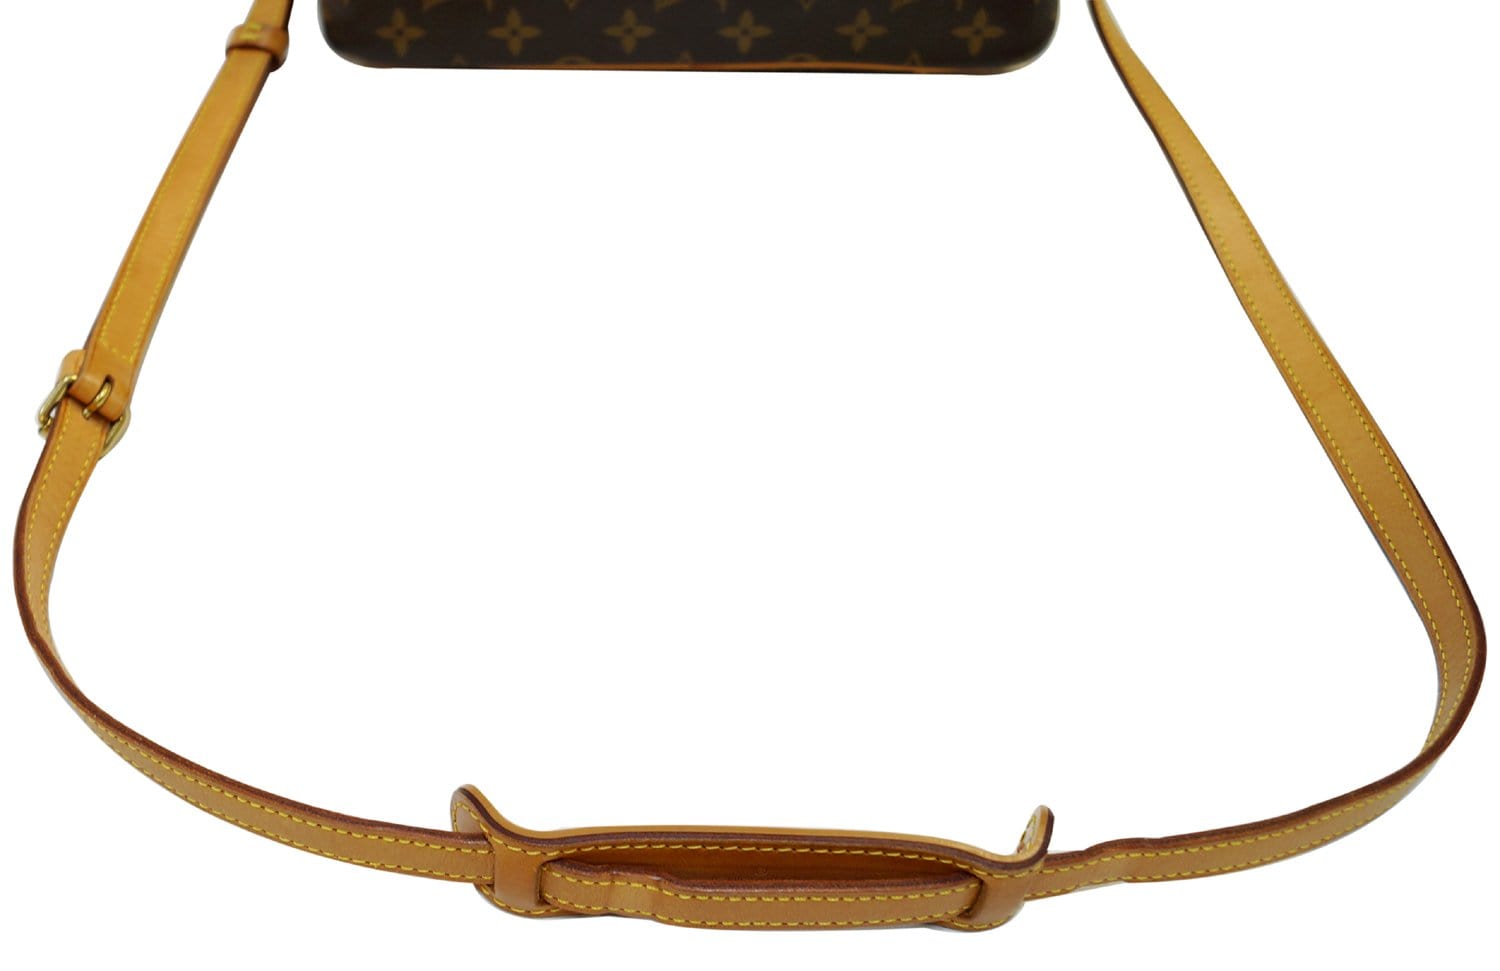 Louis Vuitton Trocadéro Shoulder bag 341700